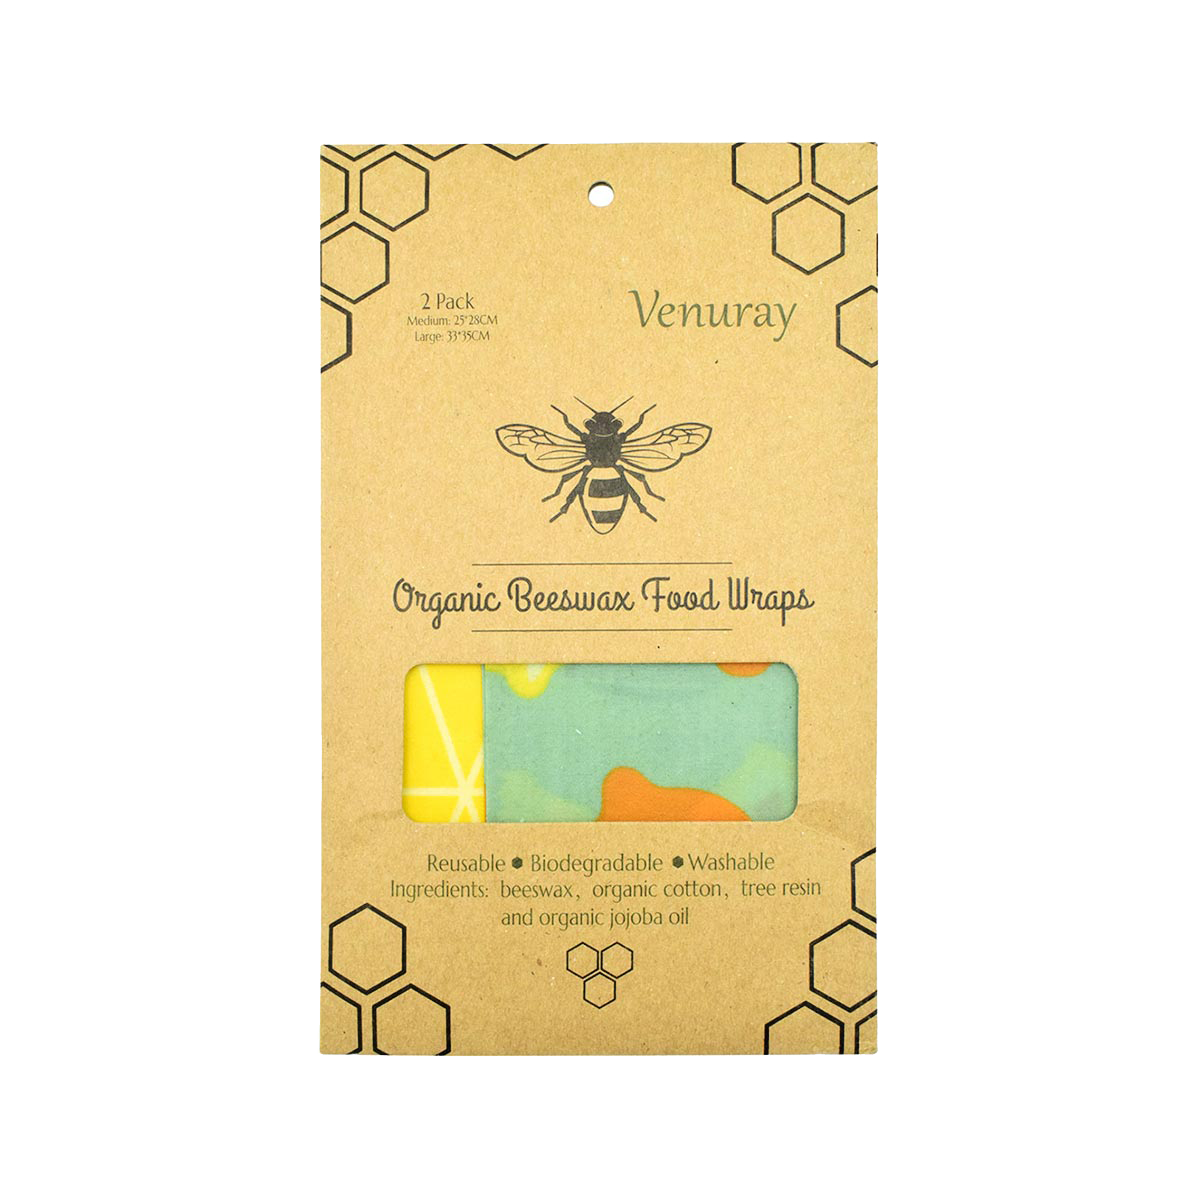 Venuray Organic Beeswax Food Wraps 2-pack